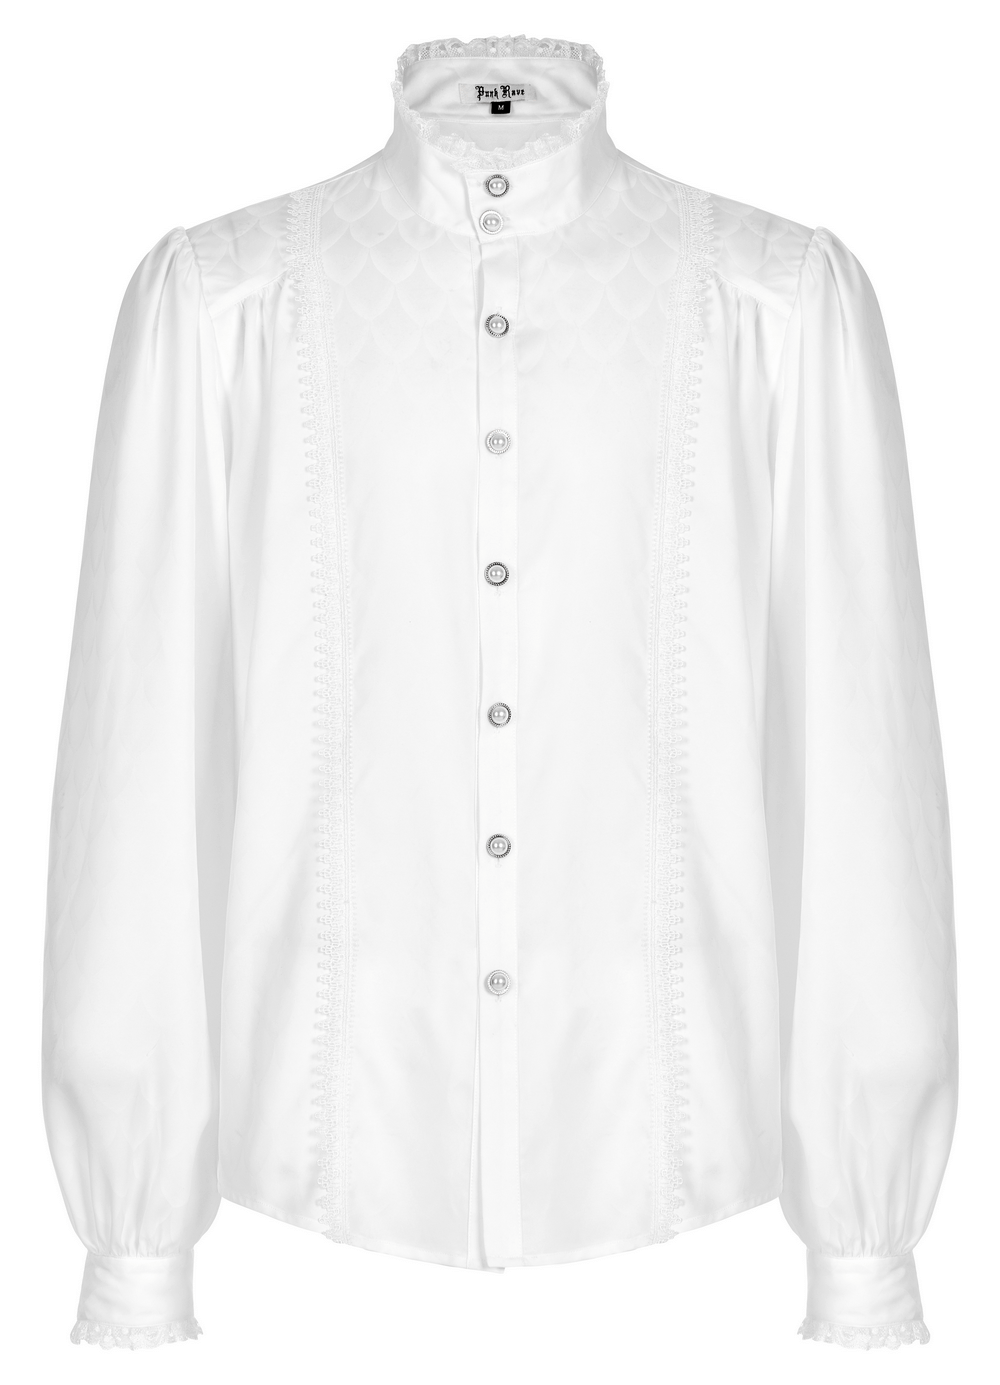 Victorian-Inspired Men's Silky Jacquard Dress Shirt - HARD'N'HEAVY